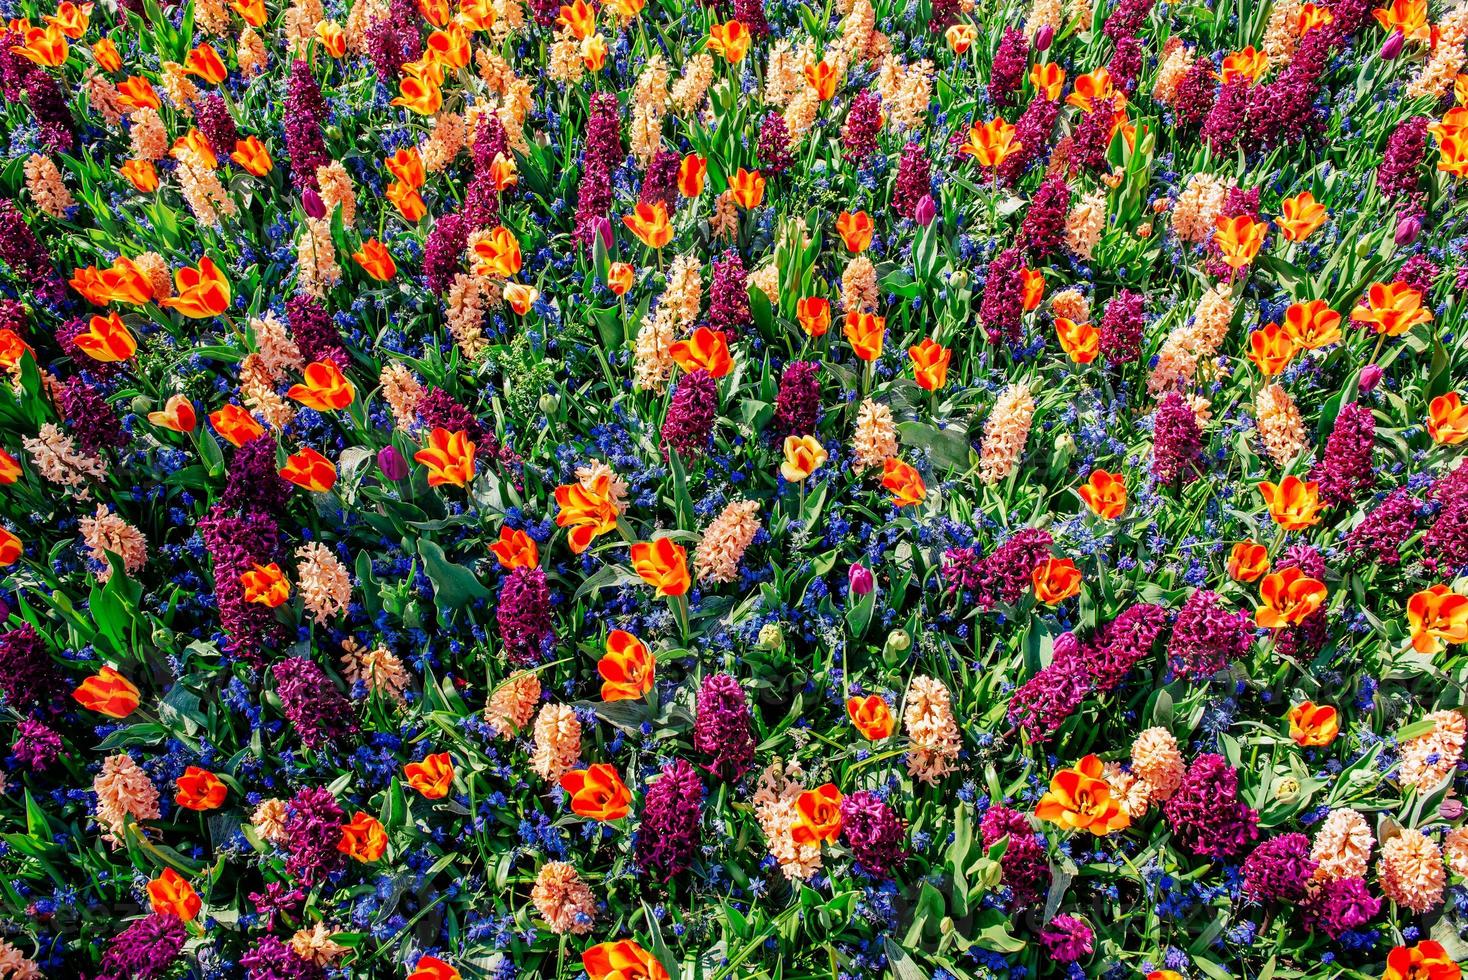 lindos jacintos multicoloridos. Holanda. parque de flores keukenhof. foto